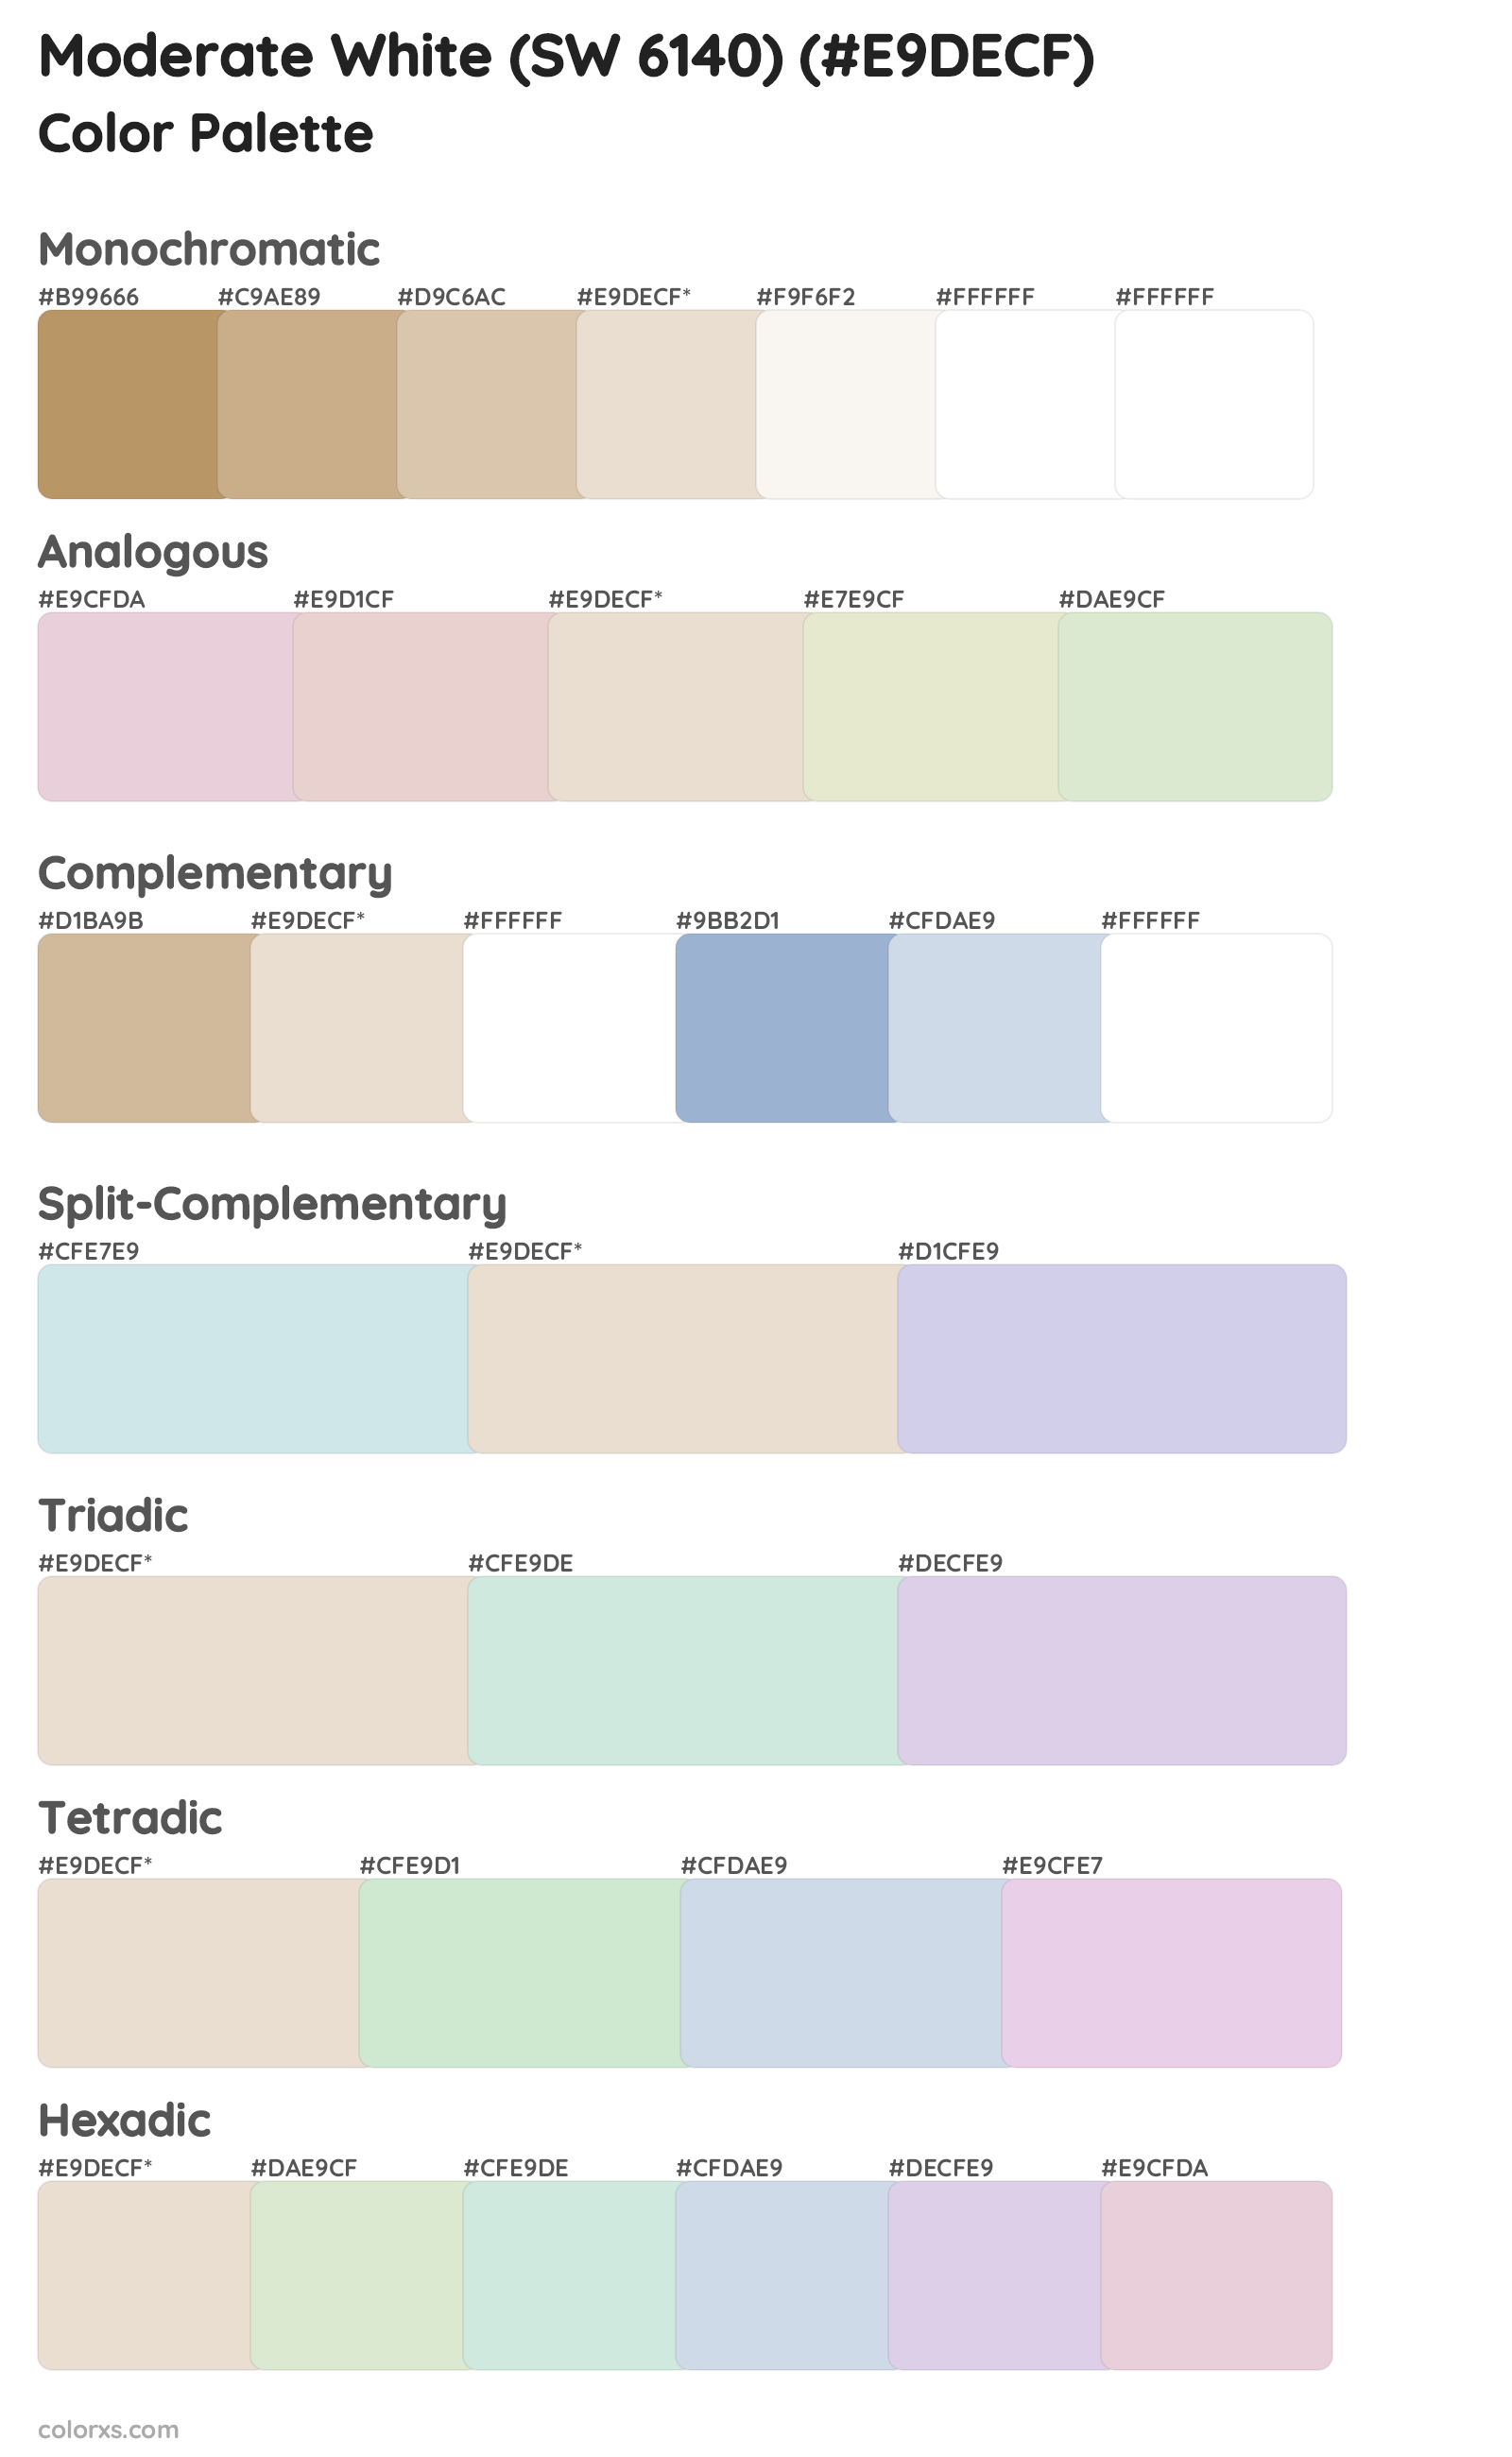 Moderate White (SW 6140) Color Scheme Palettes